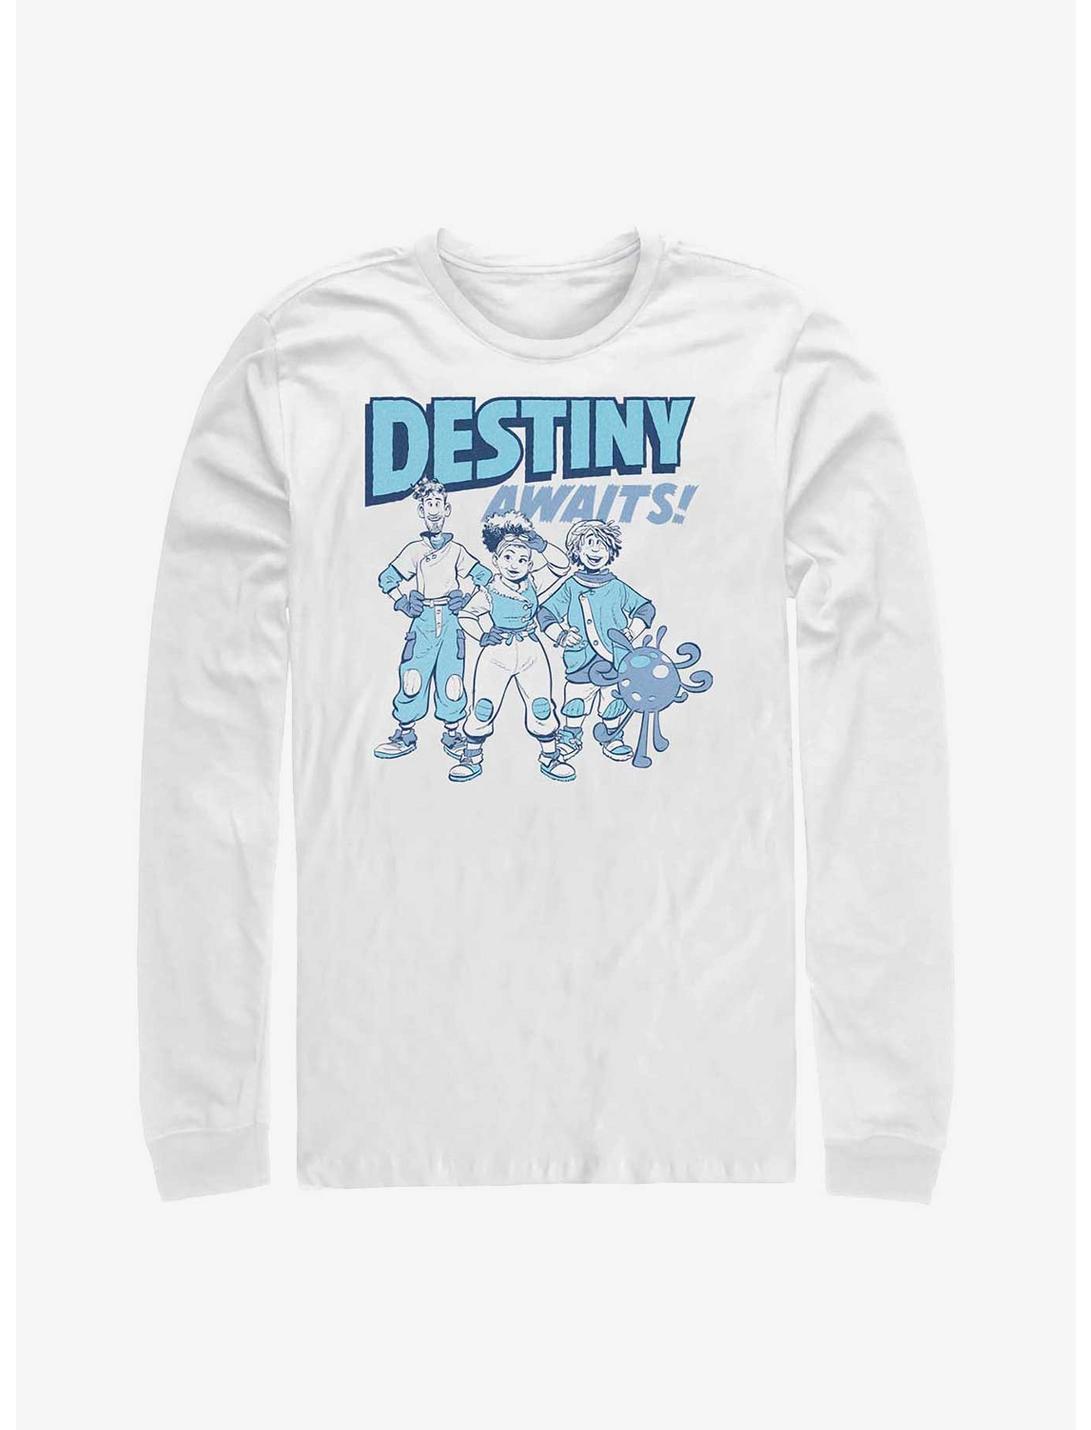 Disney Strange World Destiny Awaits! Long-Sleeve T-Shirt, WHITE, hi-res